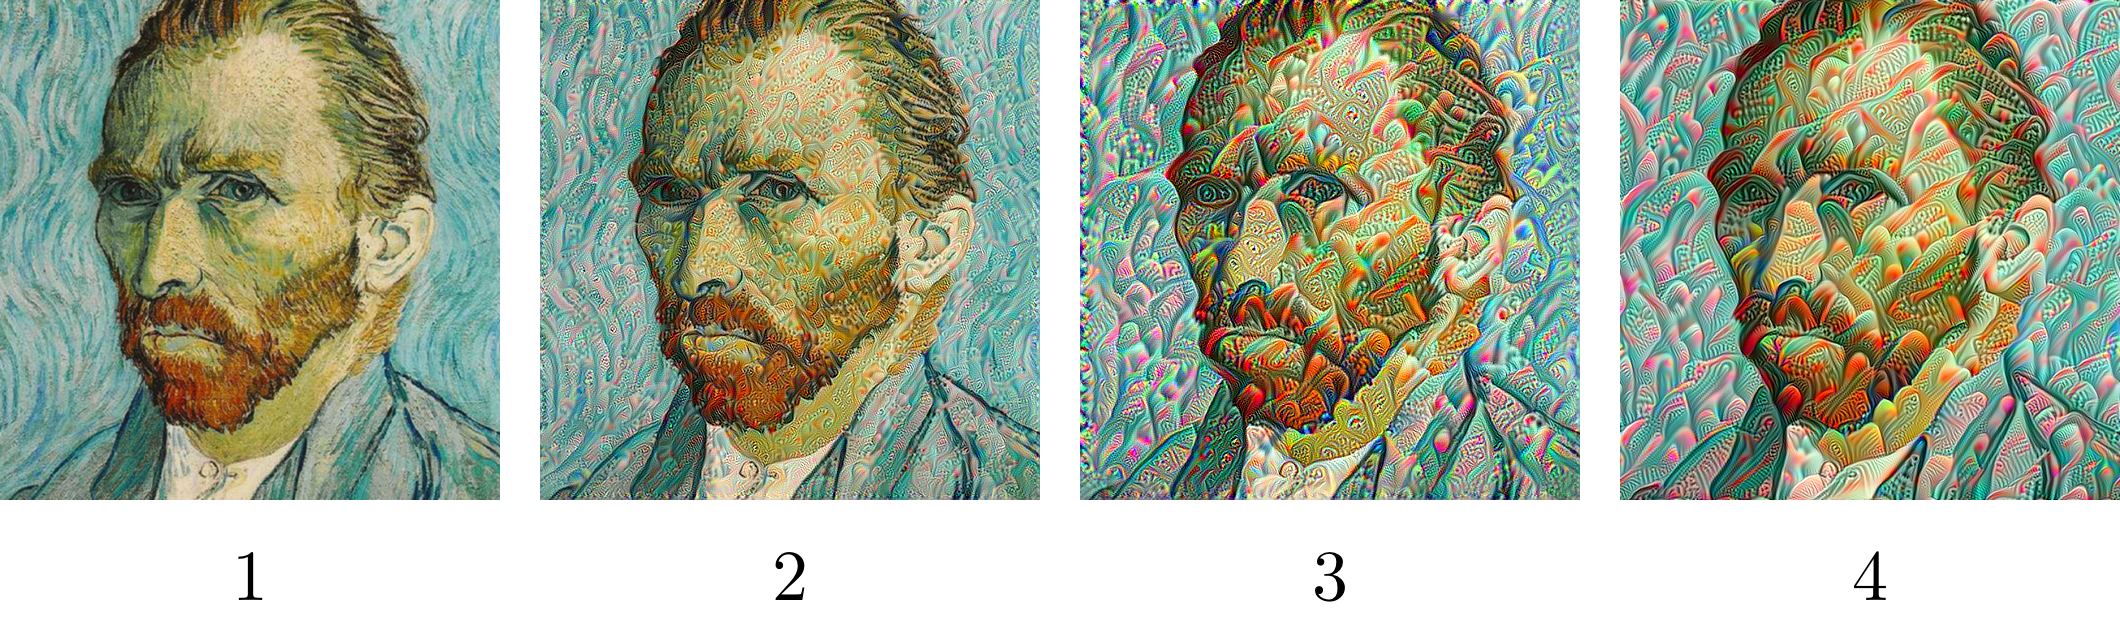 Four portraits of Vincent van Gogh, each optimized using different configurations of DeepDream